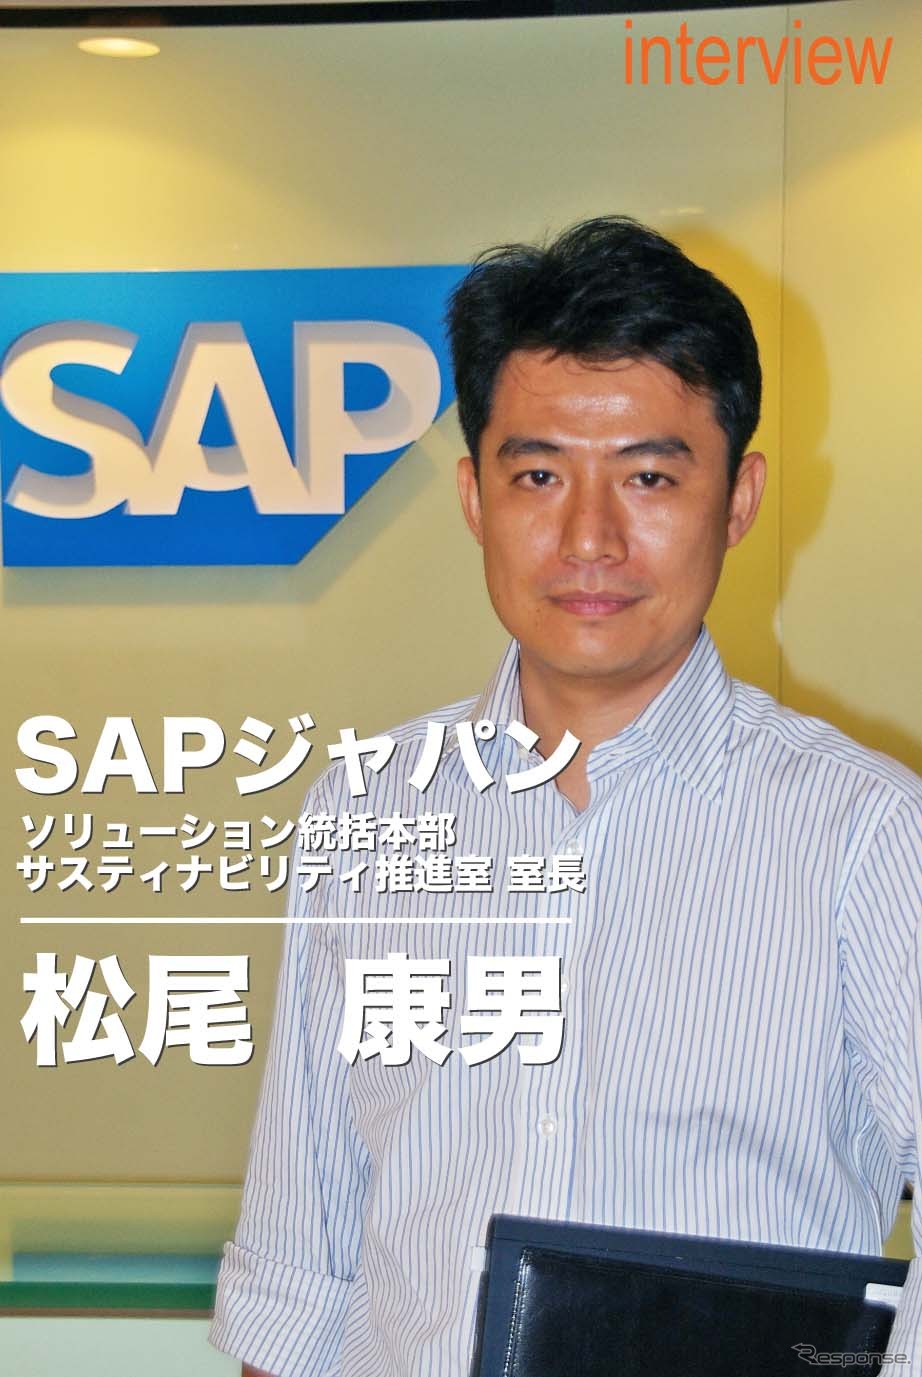 SAPジャパン ソリューション統括本部 サスティナビリティ推進室 室長 松尾康男氏